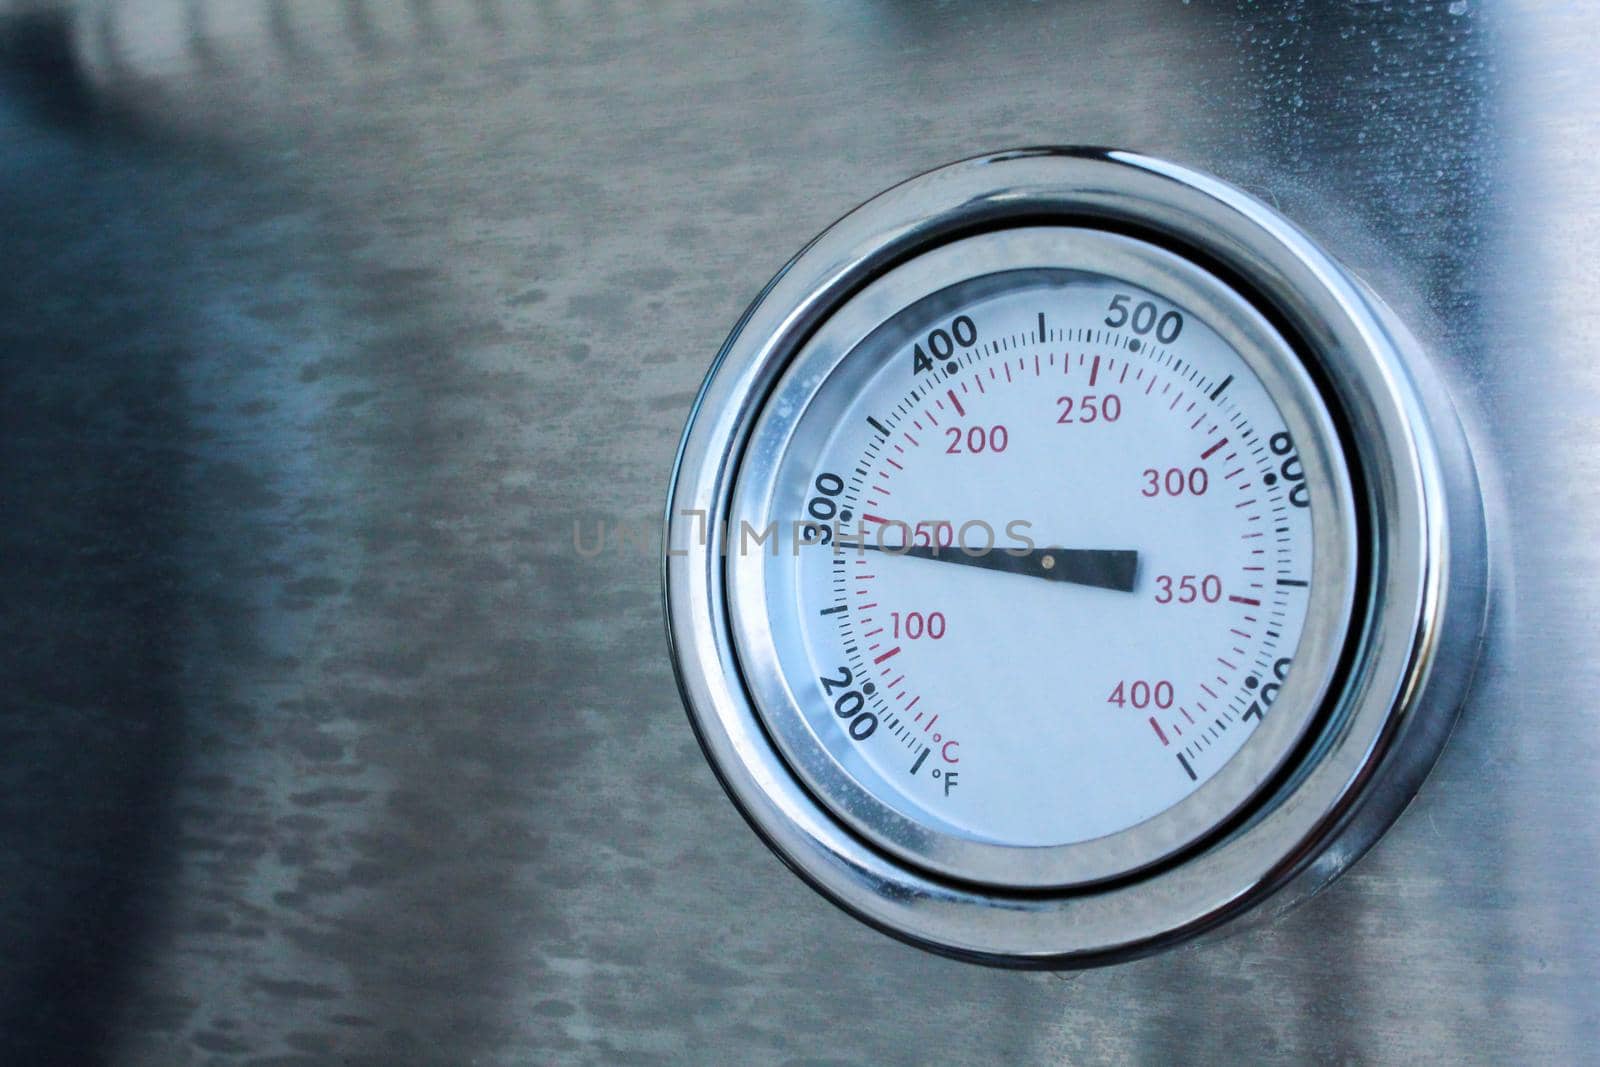 temperature gauge display barrel grill. by JuliaDorian